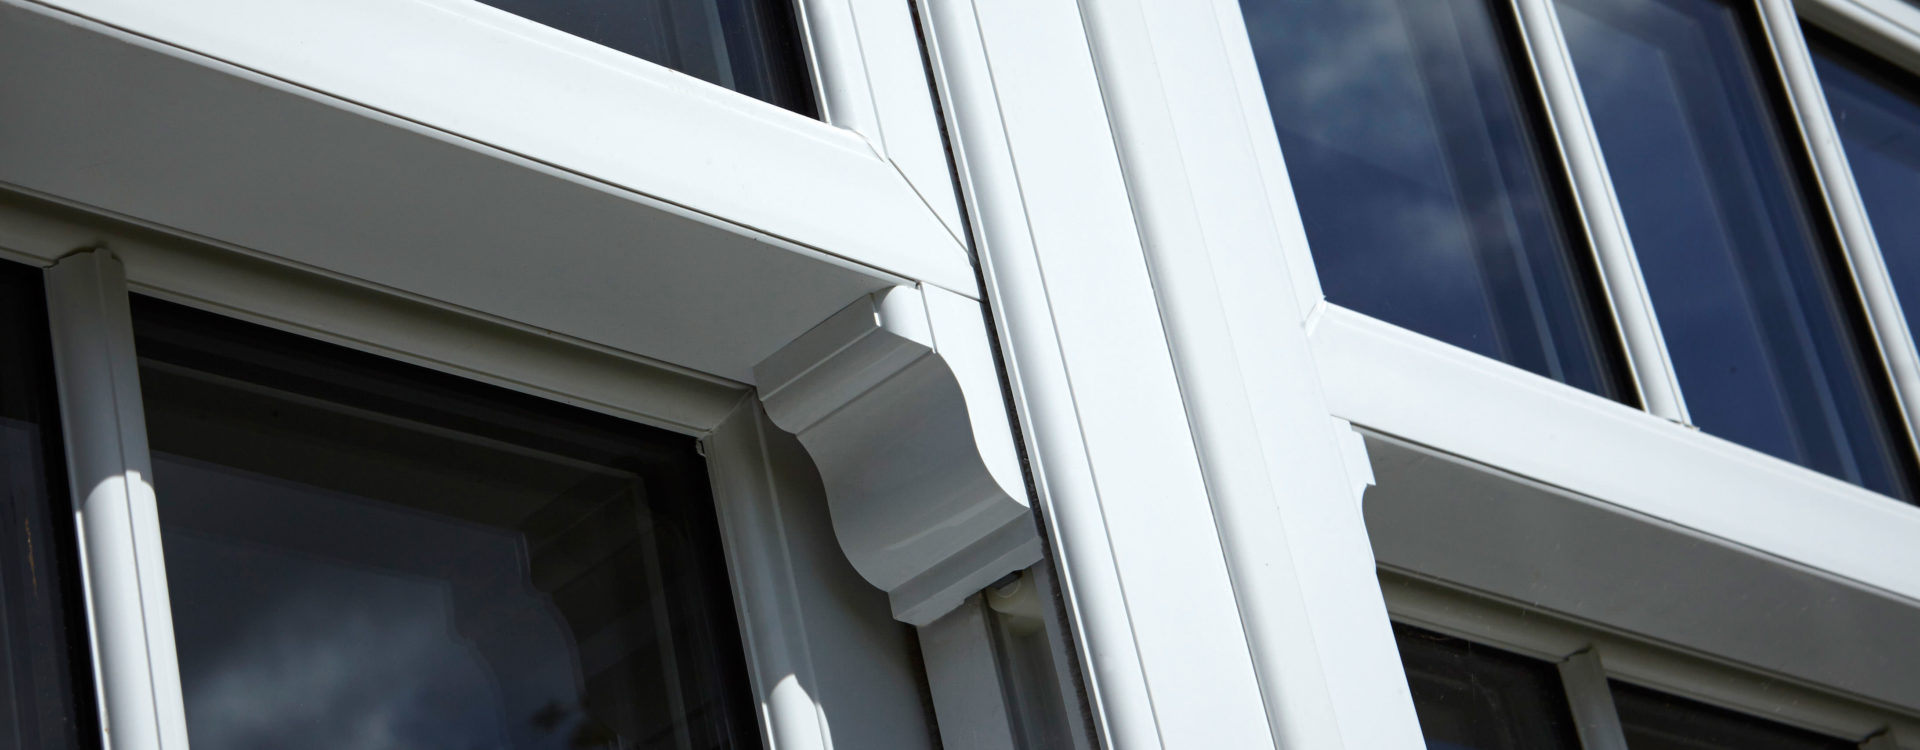 vertical sliding sash windows installation company worcester